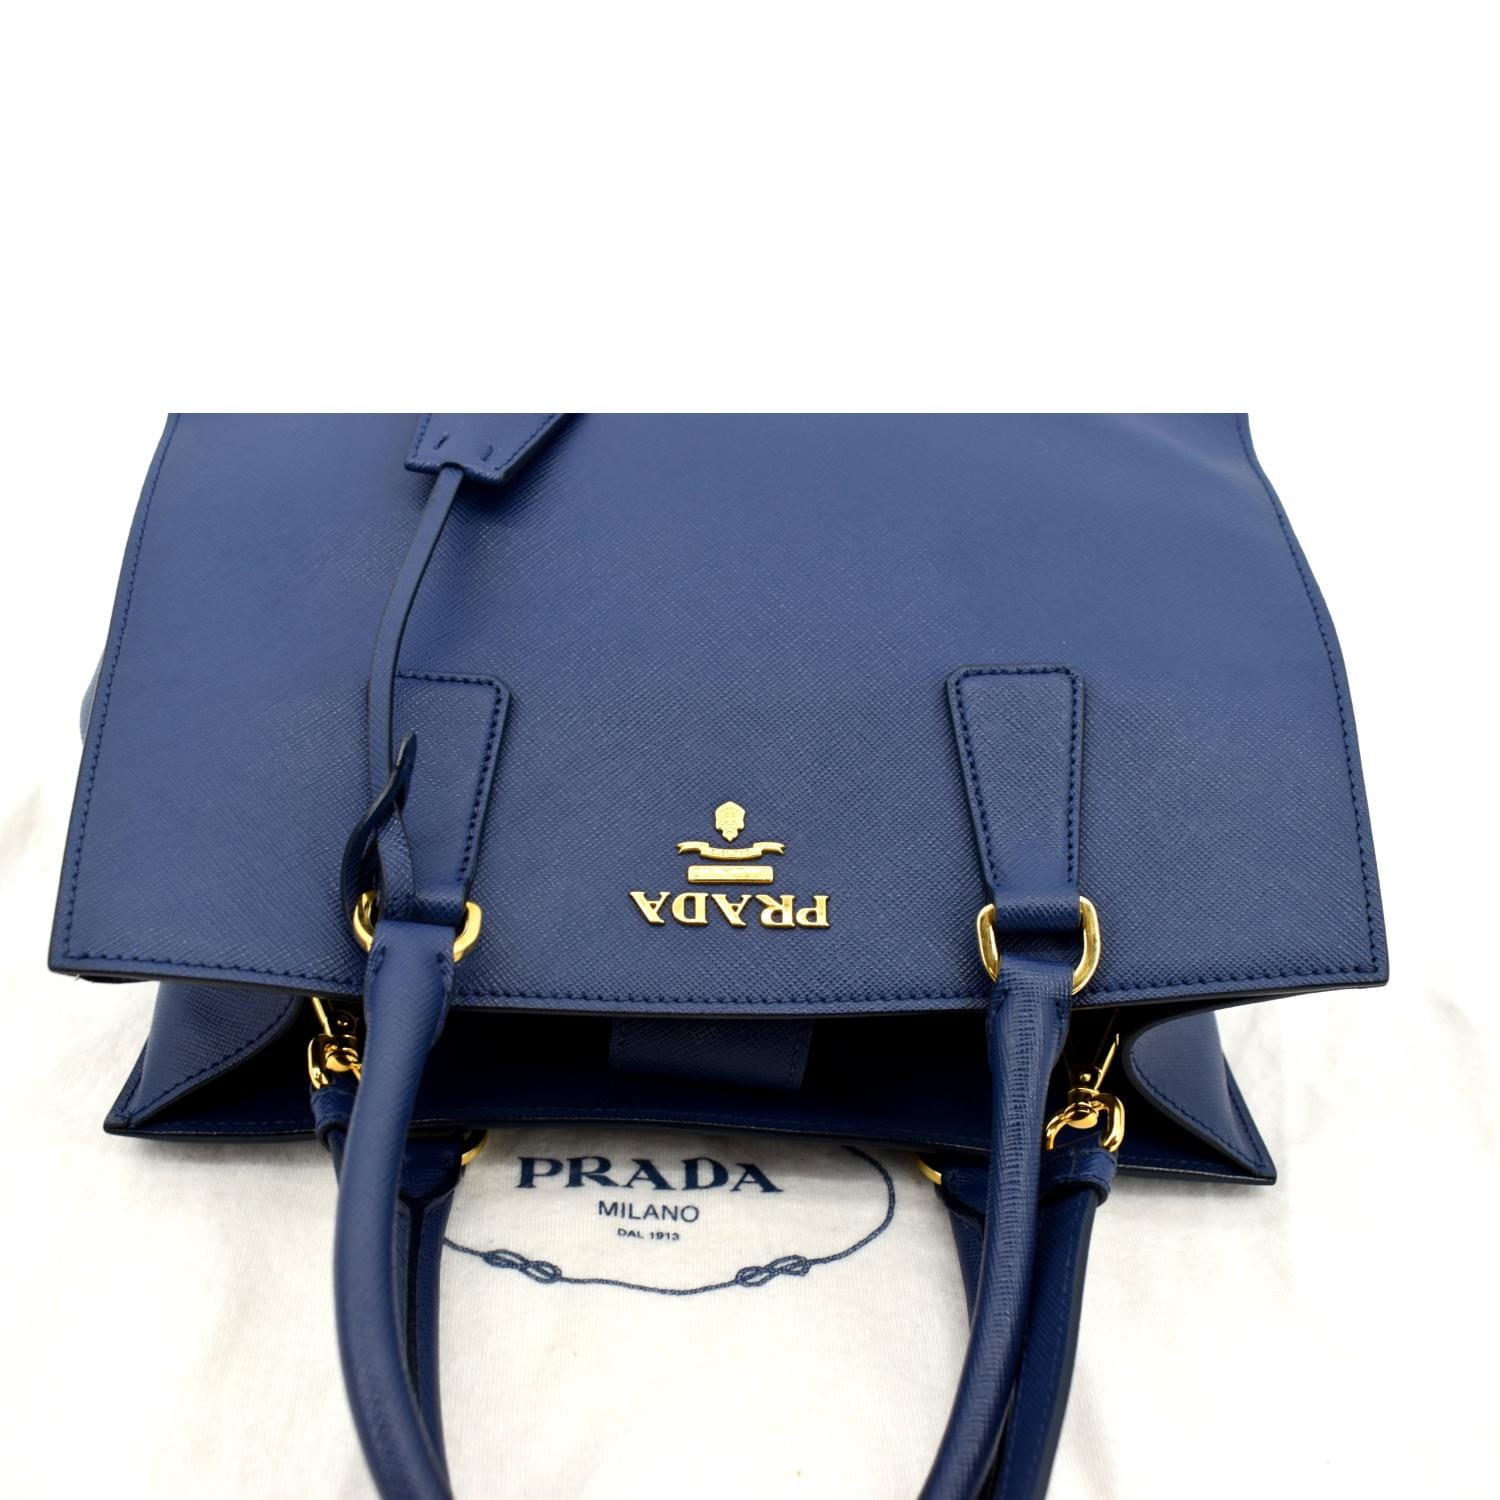 Prada Small Galleria Ombré Saffiano Leather Bag - Gradient Light Blue